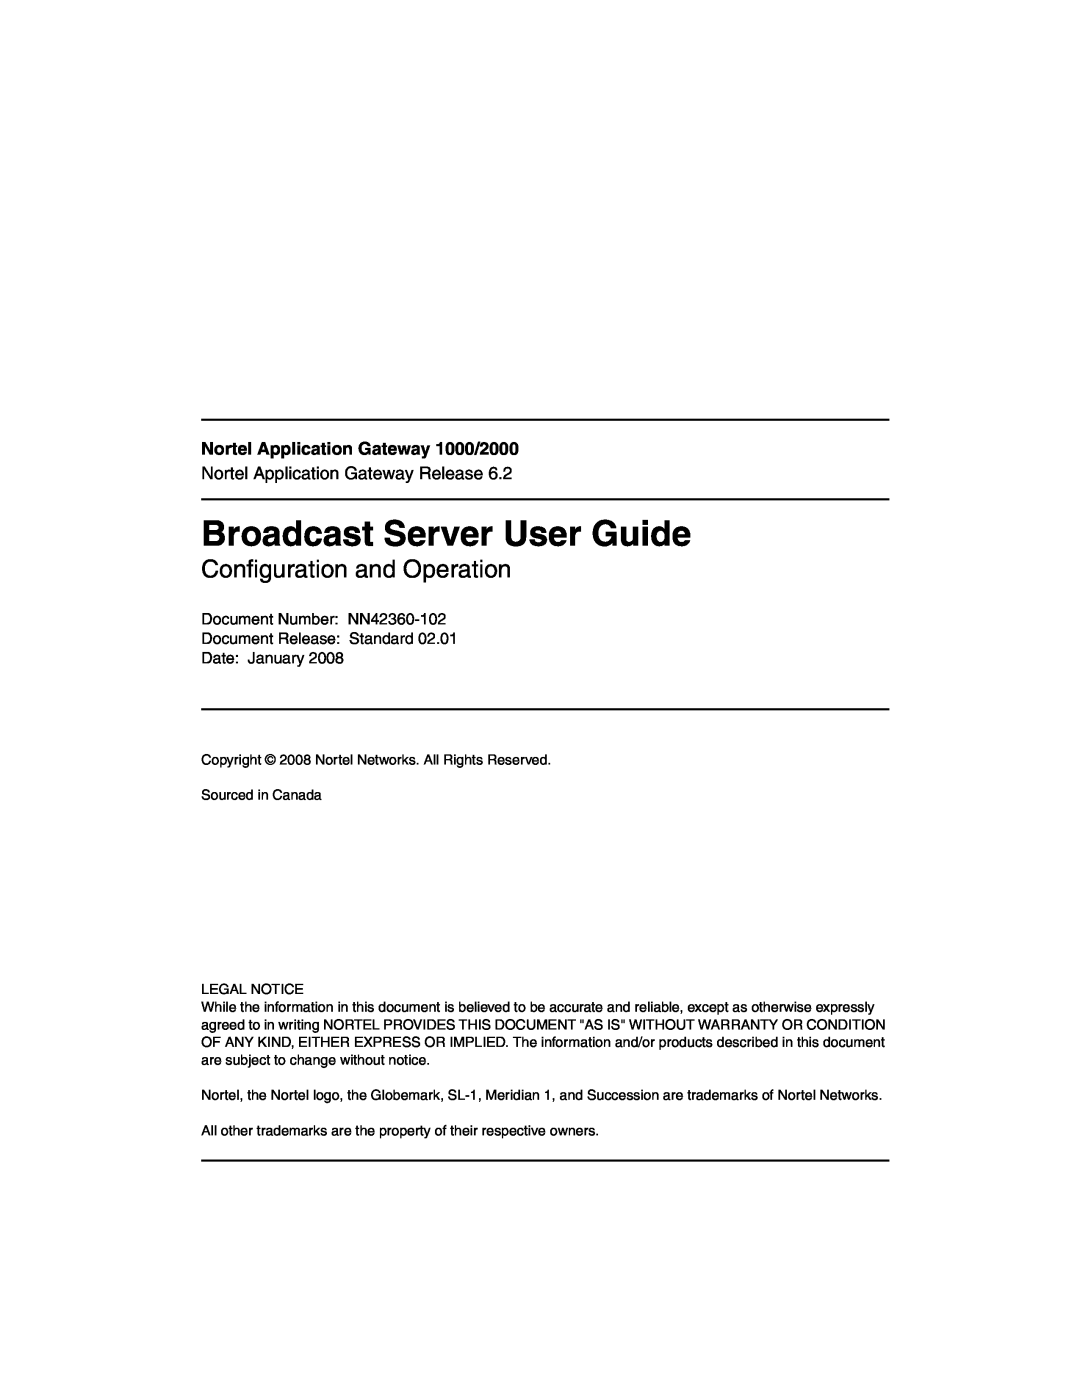 Nortel Networks warranty Broadcast Server User Guide, Nortel Application Gateway 1000/2000, Configuration and Operation 